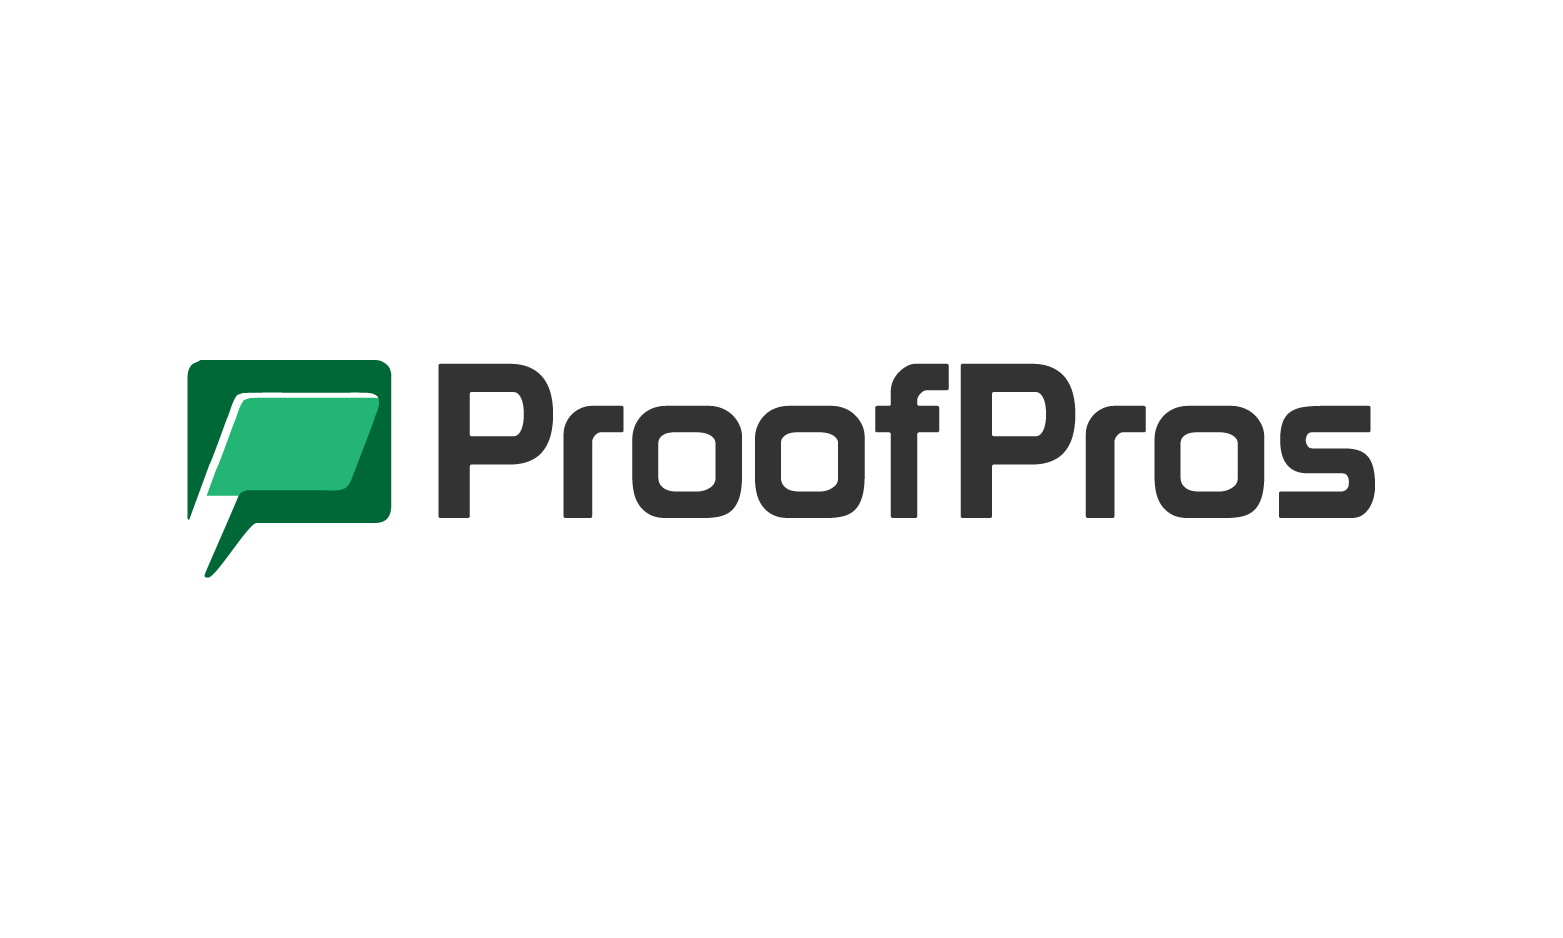 ProofPros.com - Creative brandable domain for sale